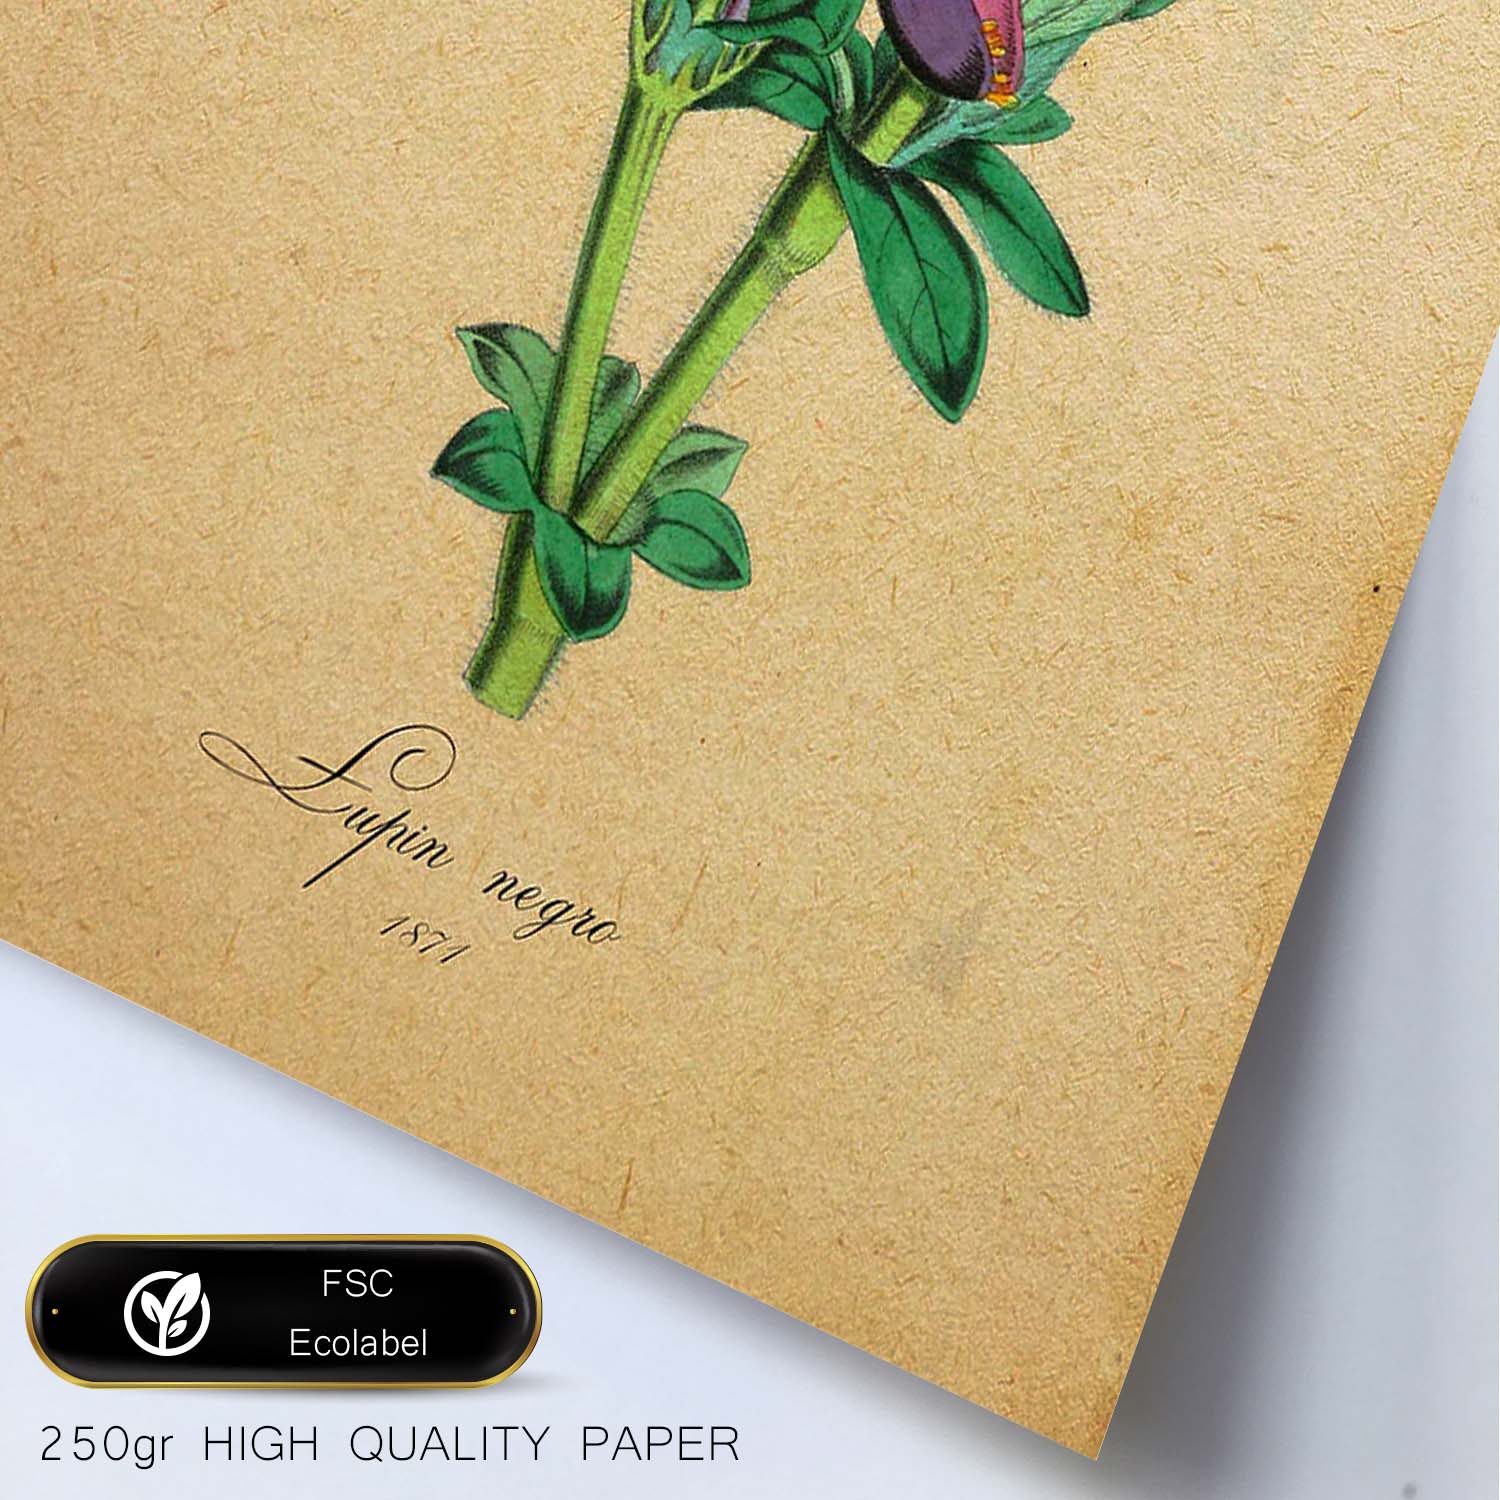 Poster de flores vintage. Lámina lupin negro con diseño vintage.-Artwork-Nacnic-Nacnic Estudio SL